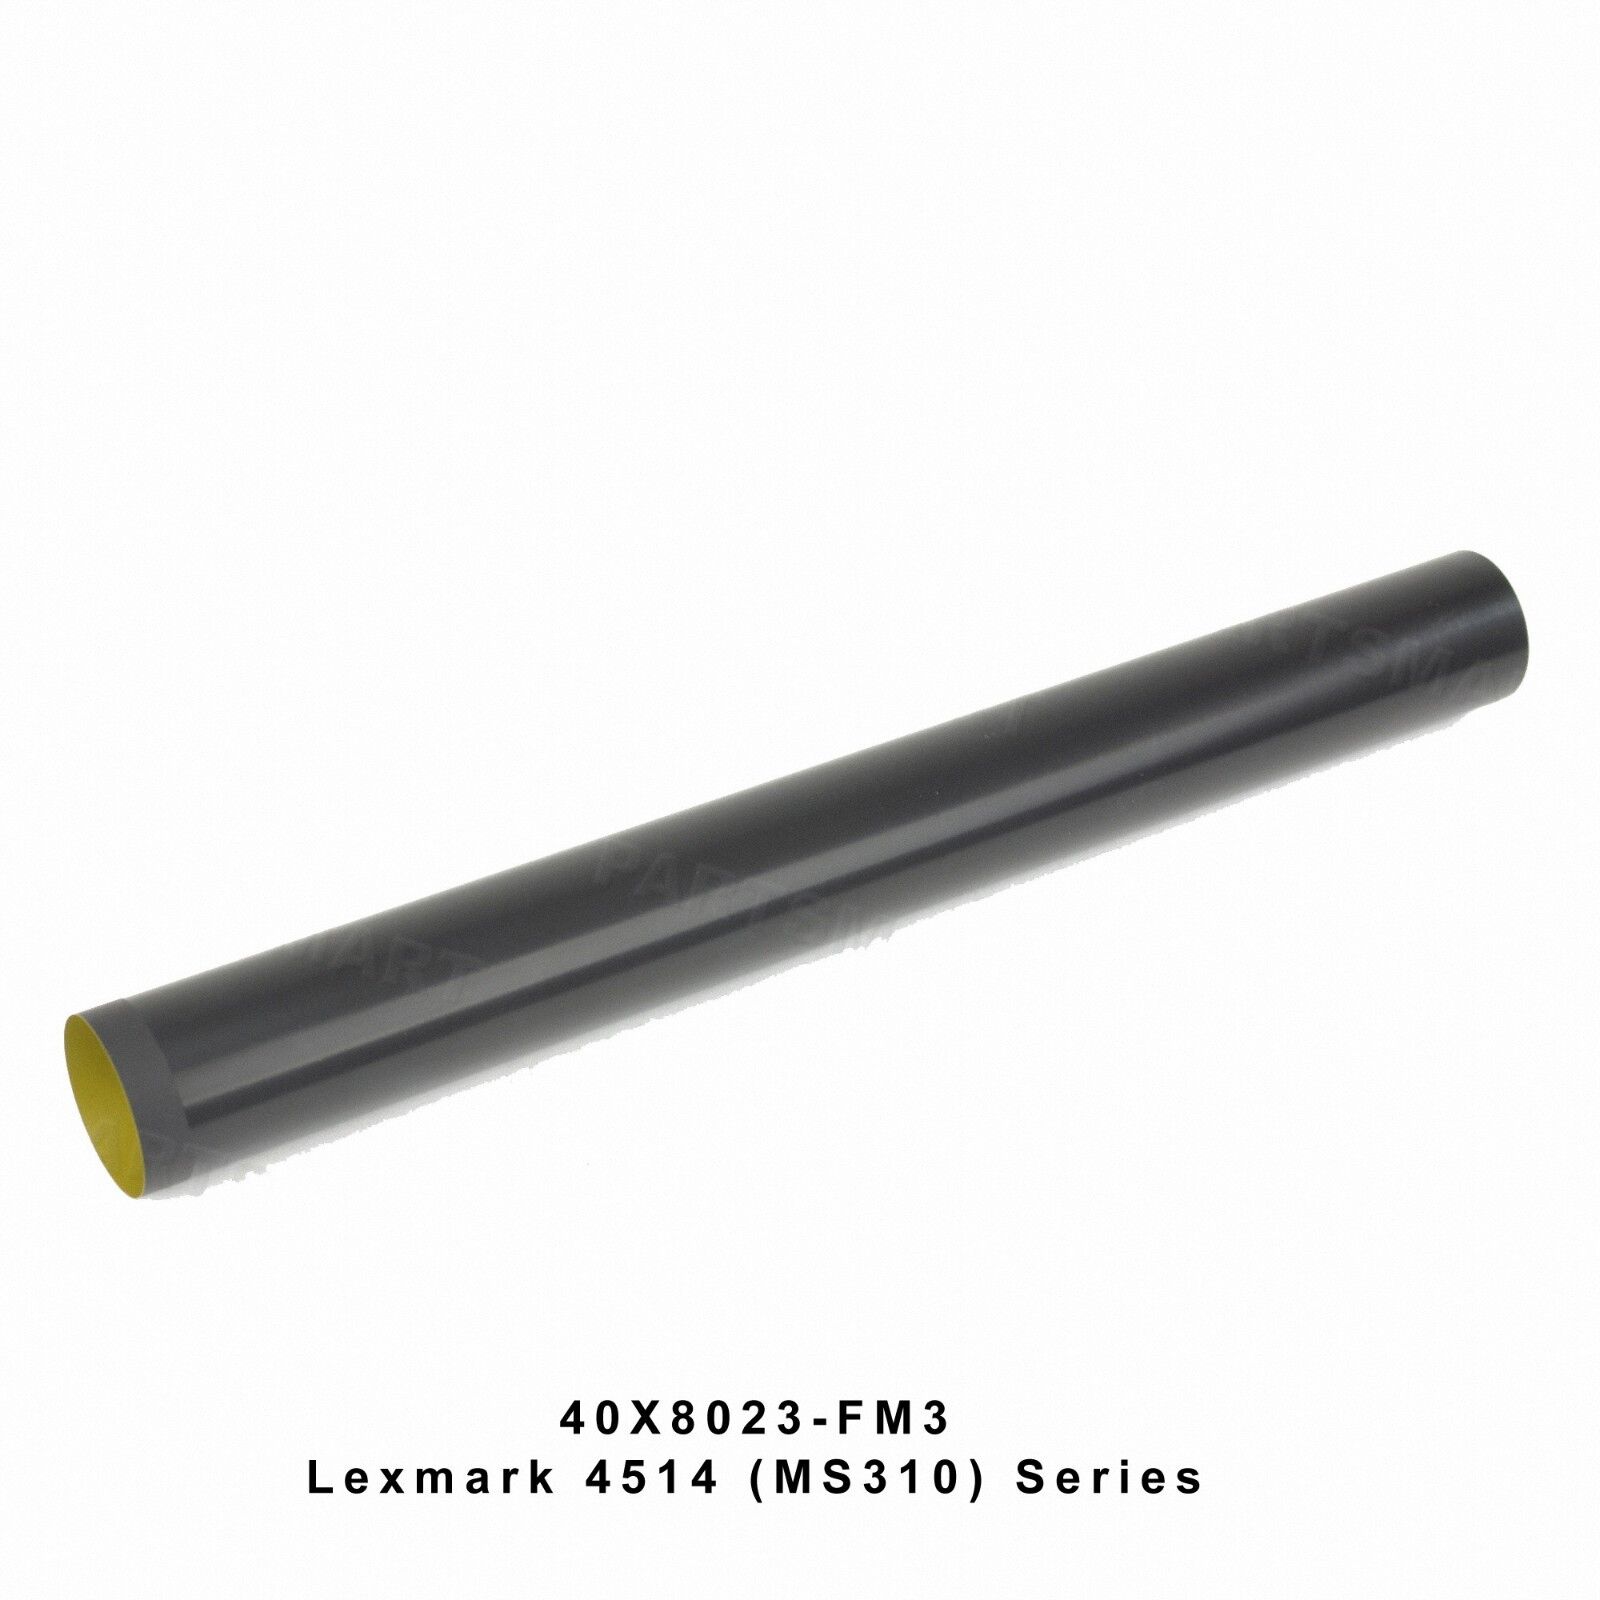 Lexmark 4514 M1140 MS310 MX310 XM1140 Fuser Film Sleeve 40X8023-FM3 OEM Quality